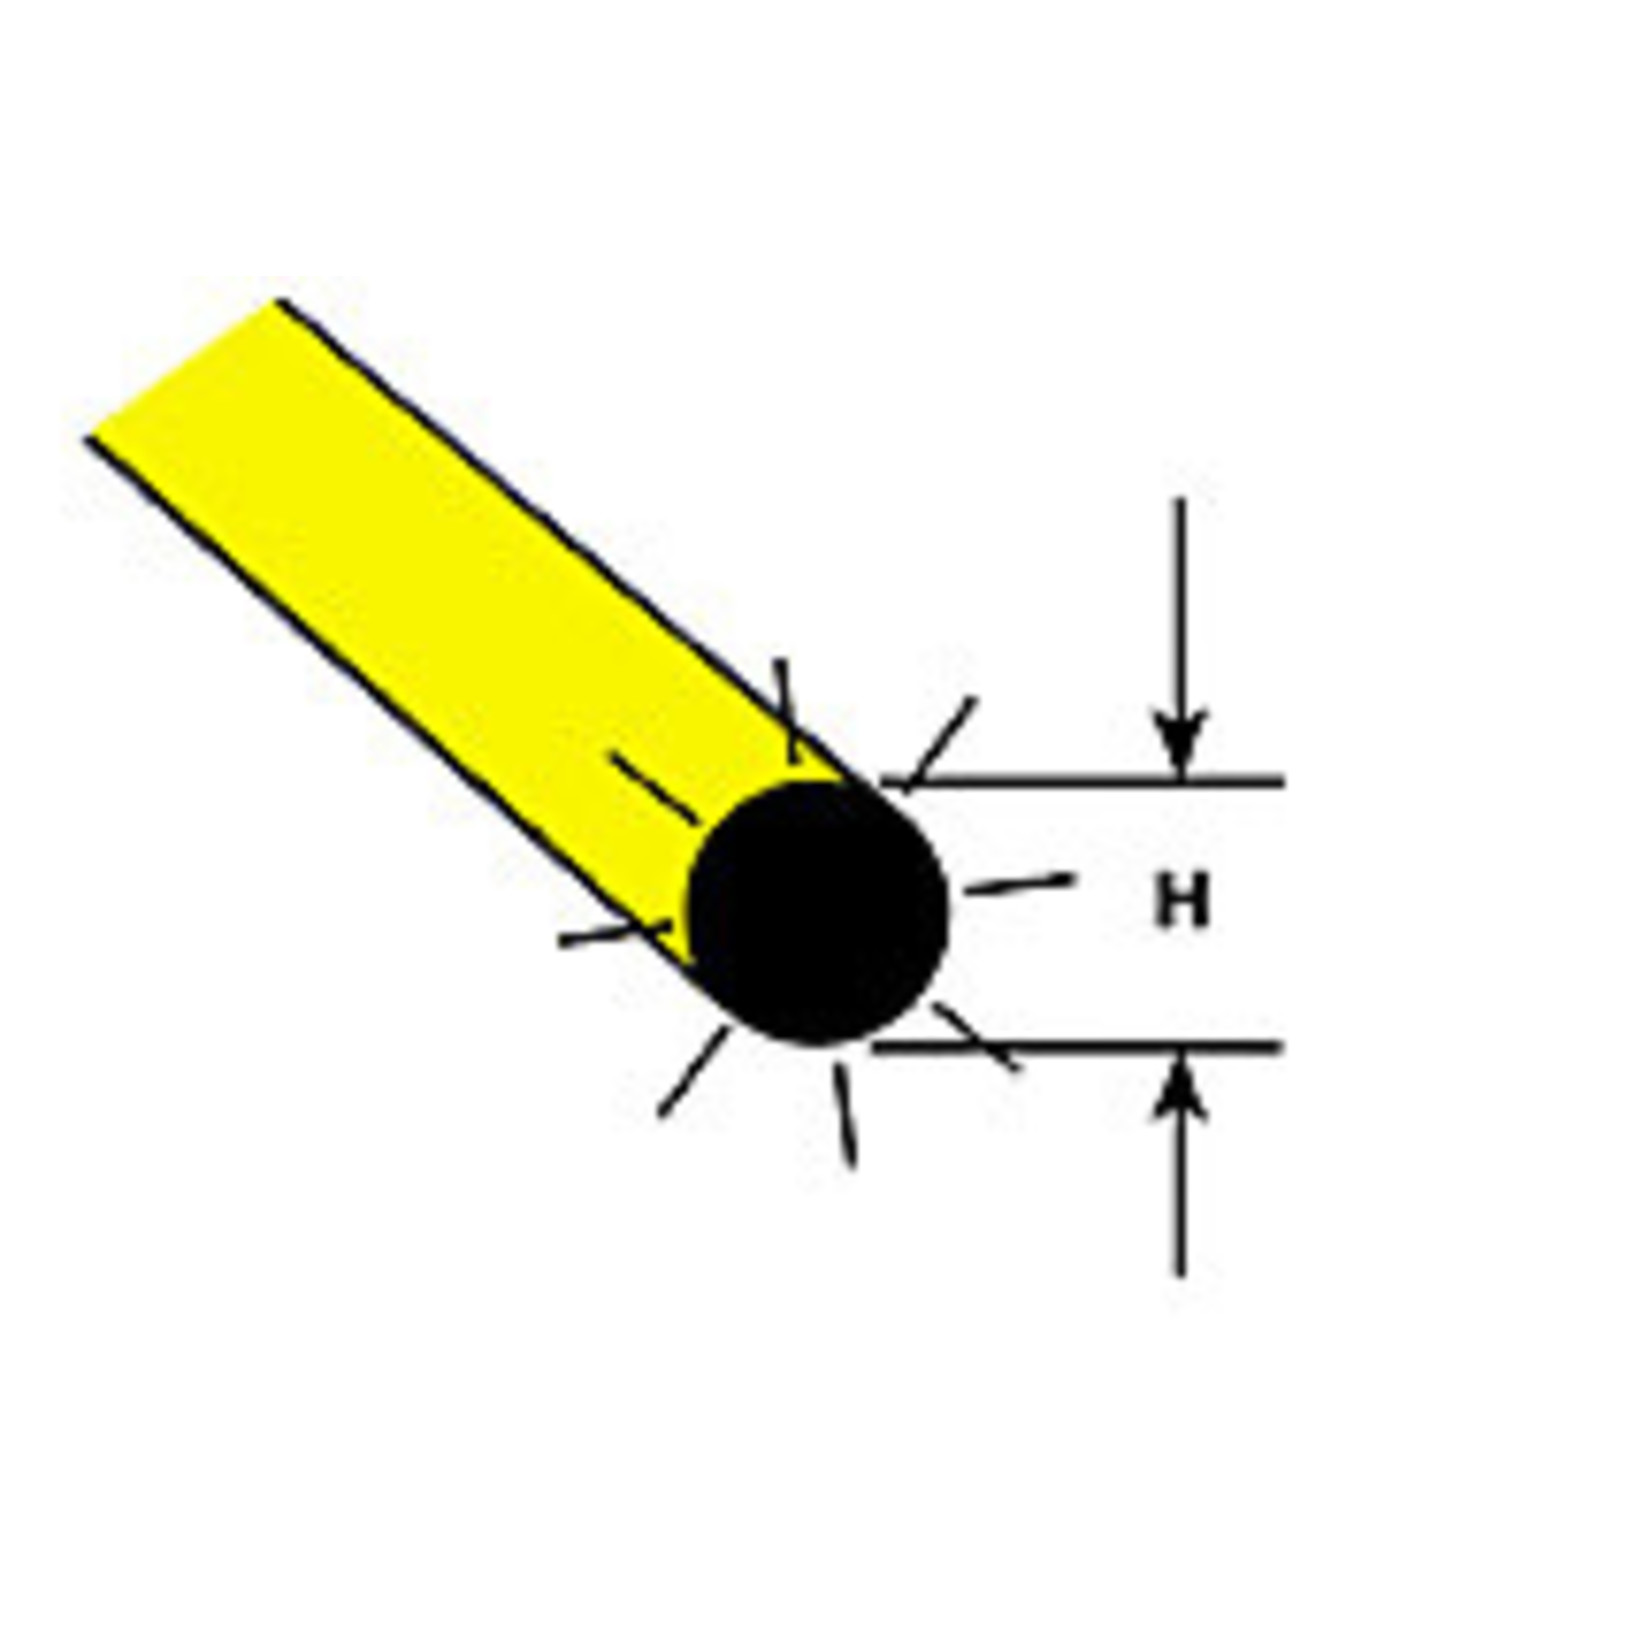 Plastruct PLA90283 Yellow Fluorescent Rod